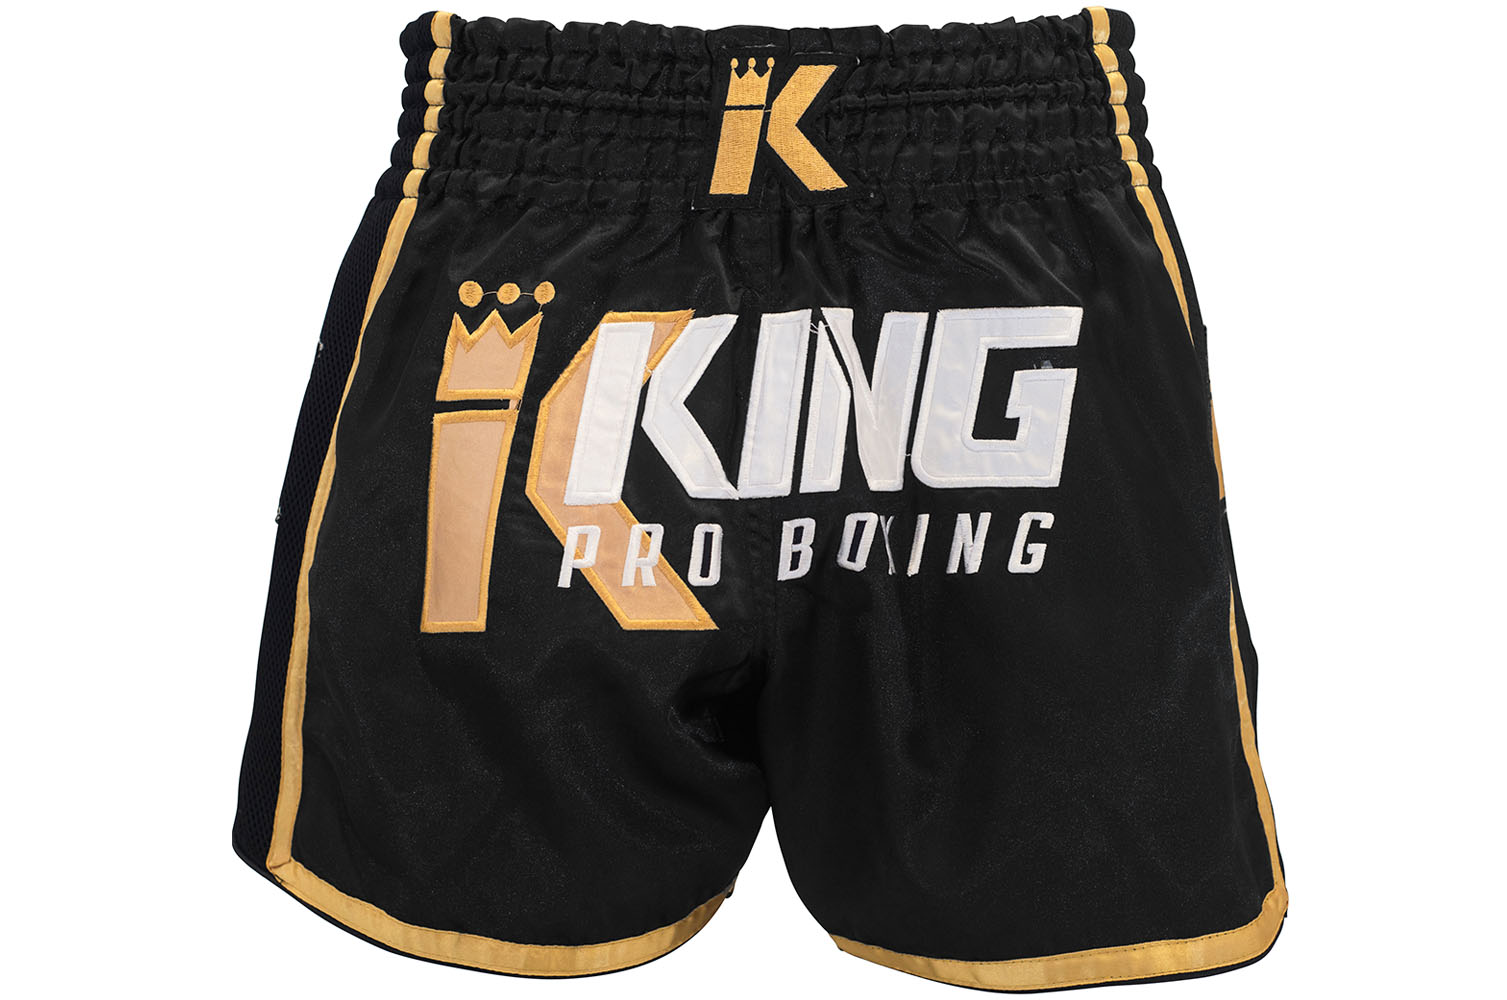 BT8 KING PRO BOXING Muay Thai Shorts 